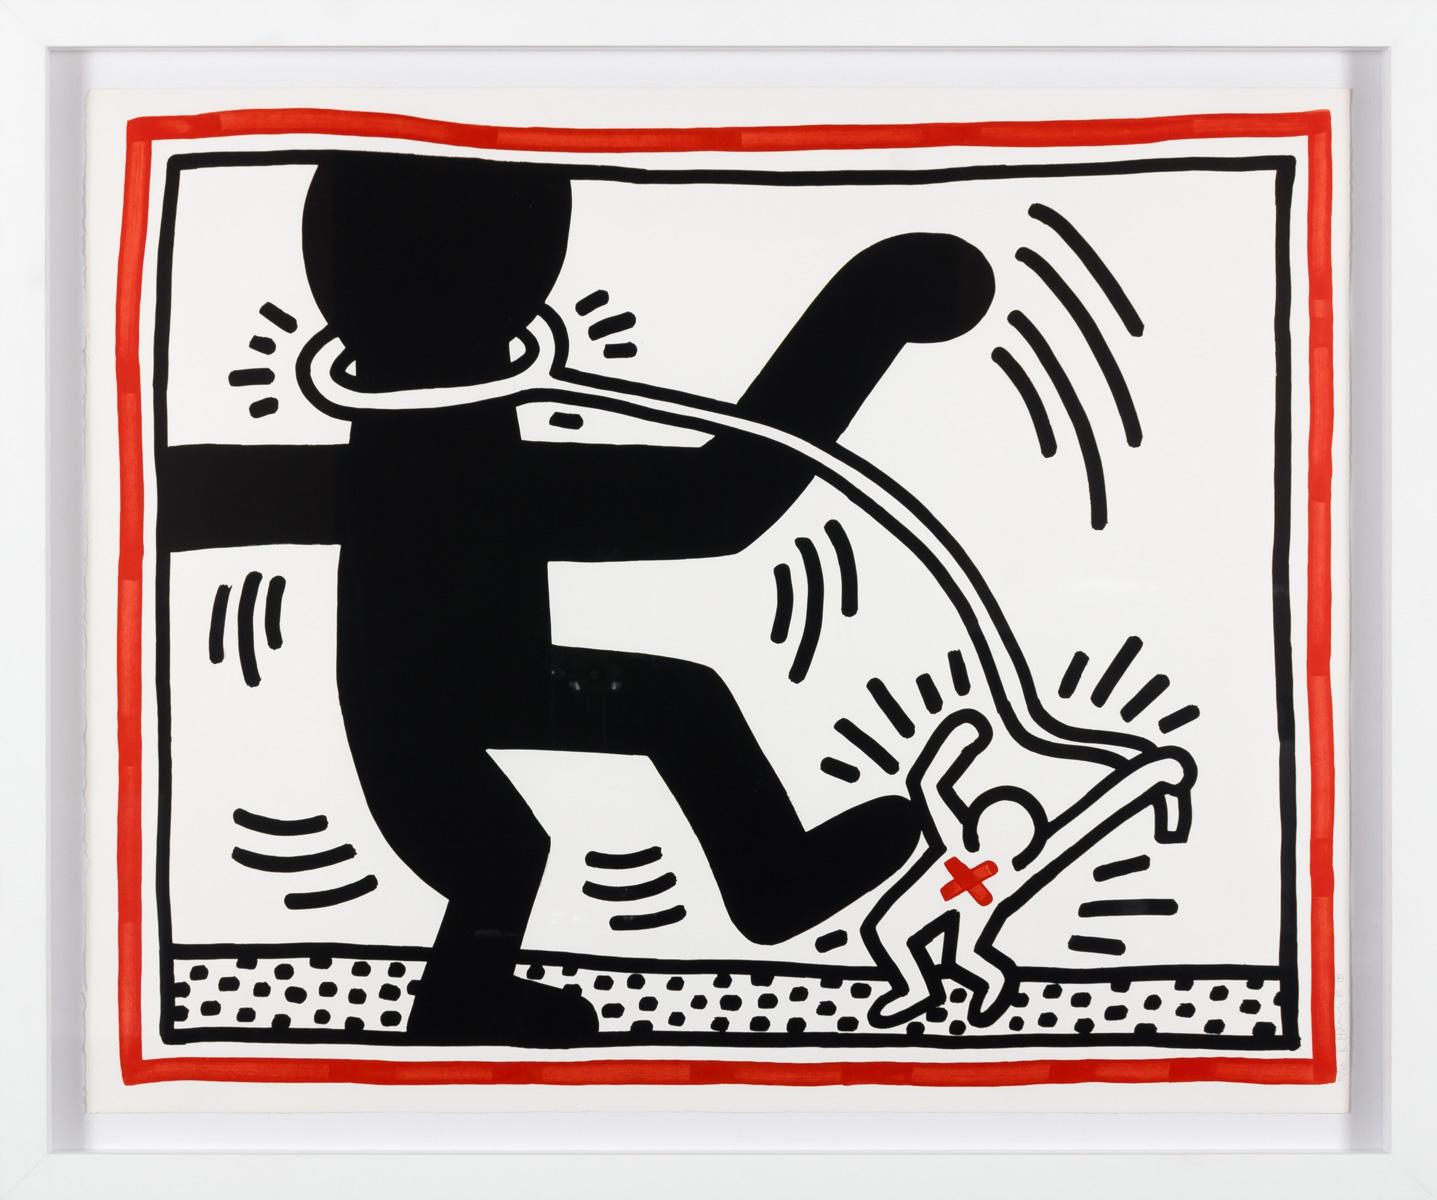 Free South Africa, 1985 (n°2) - Print de Keith Haring